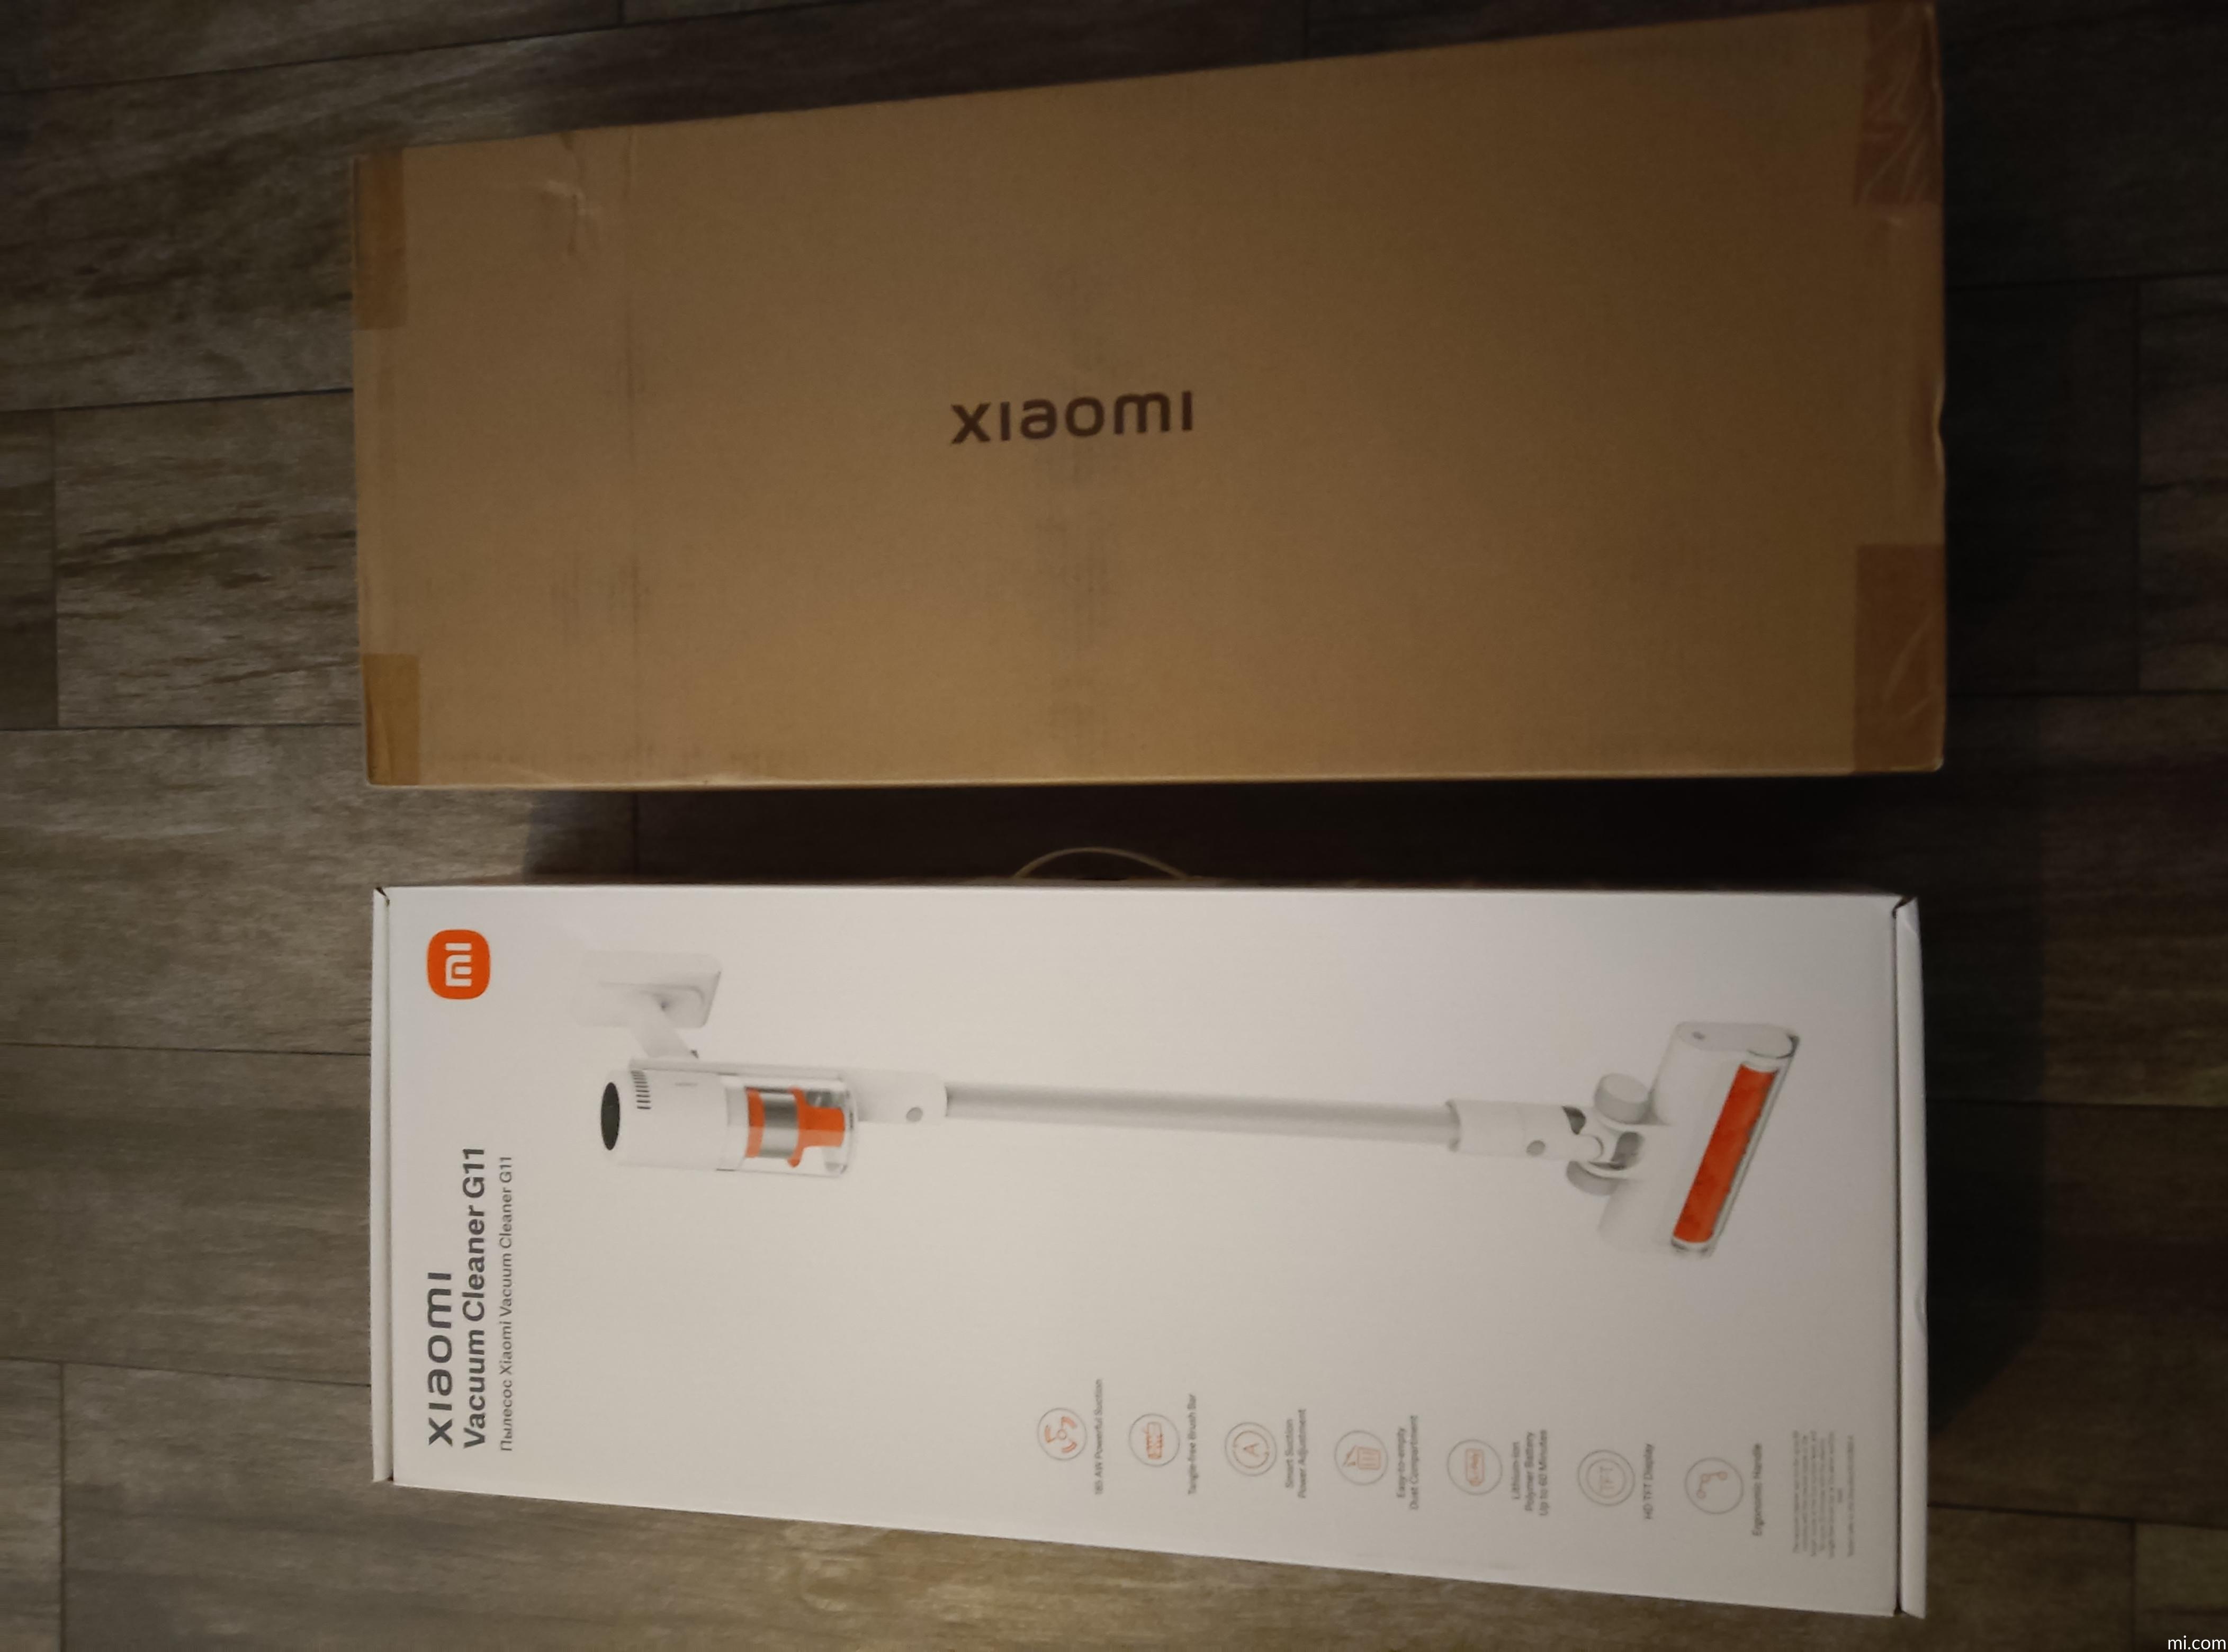 Aspirador escoba  Xiaomi Vacuum Cleaner G11, 500 W, Autonomía 60 min, 0.30  l, Tecnología Tangle-Free, Blanco